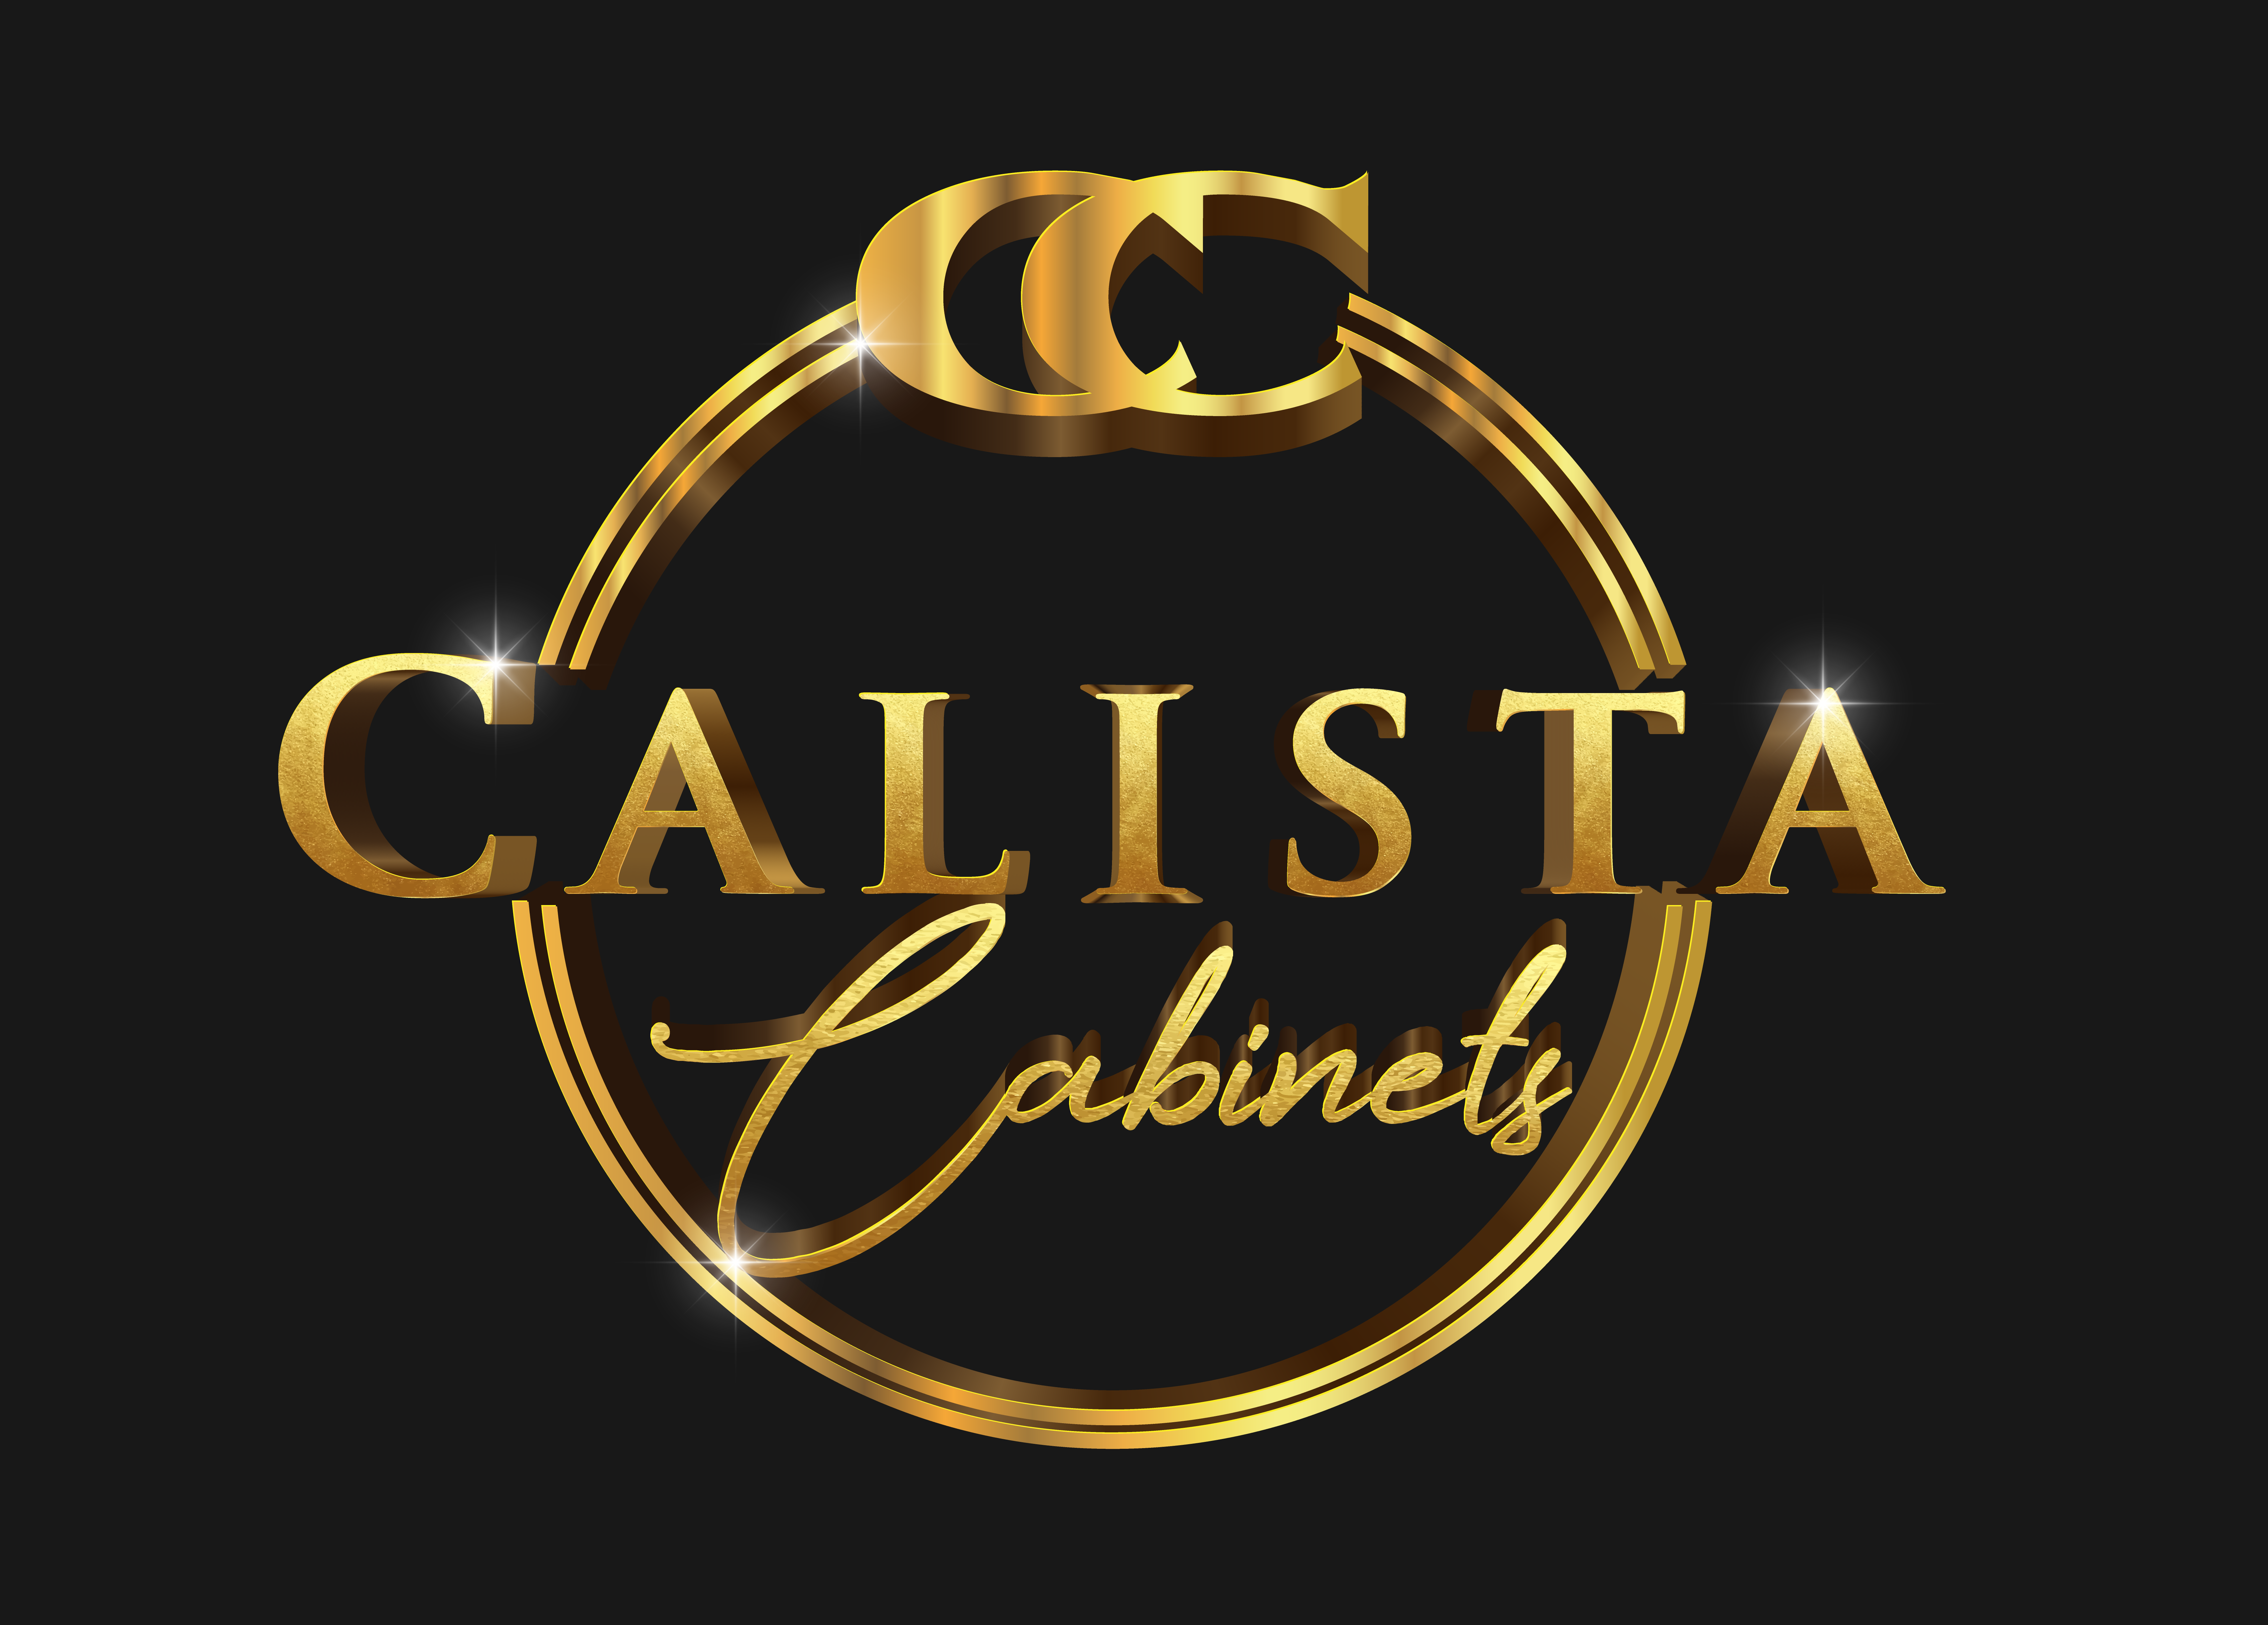 Calista Cabinets